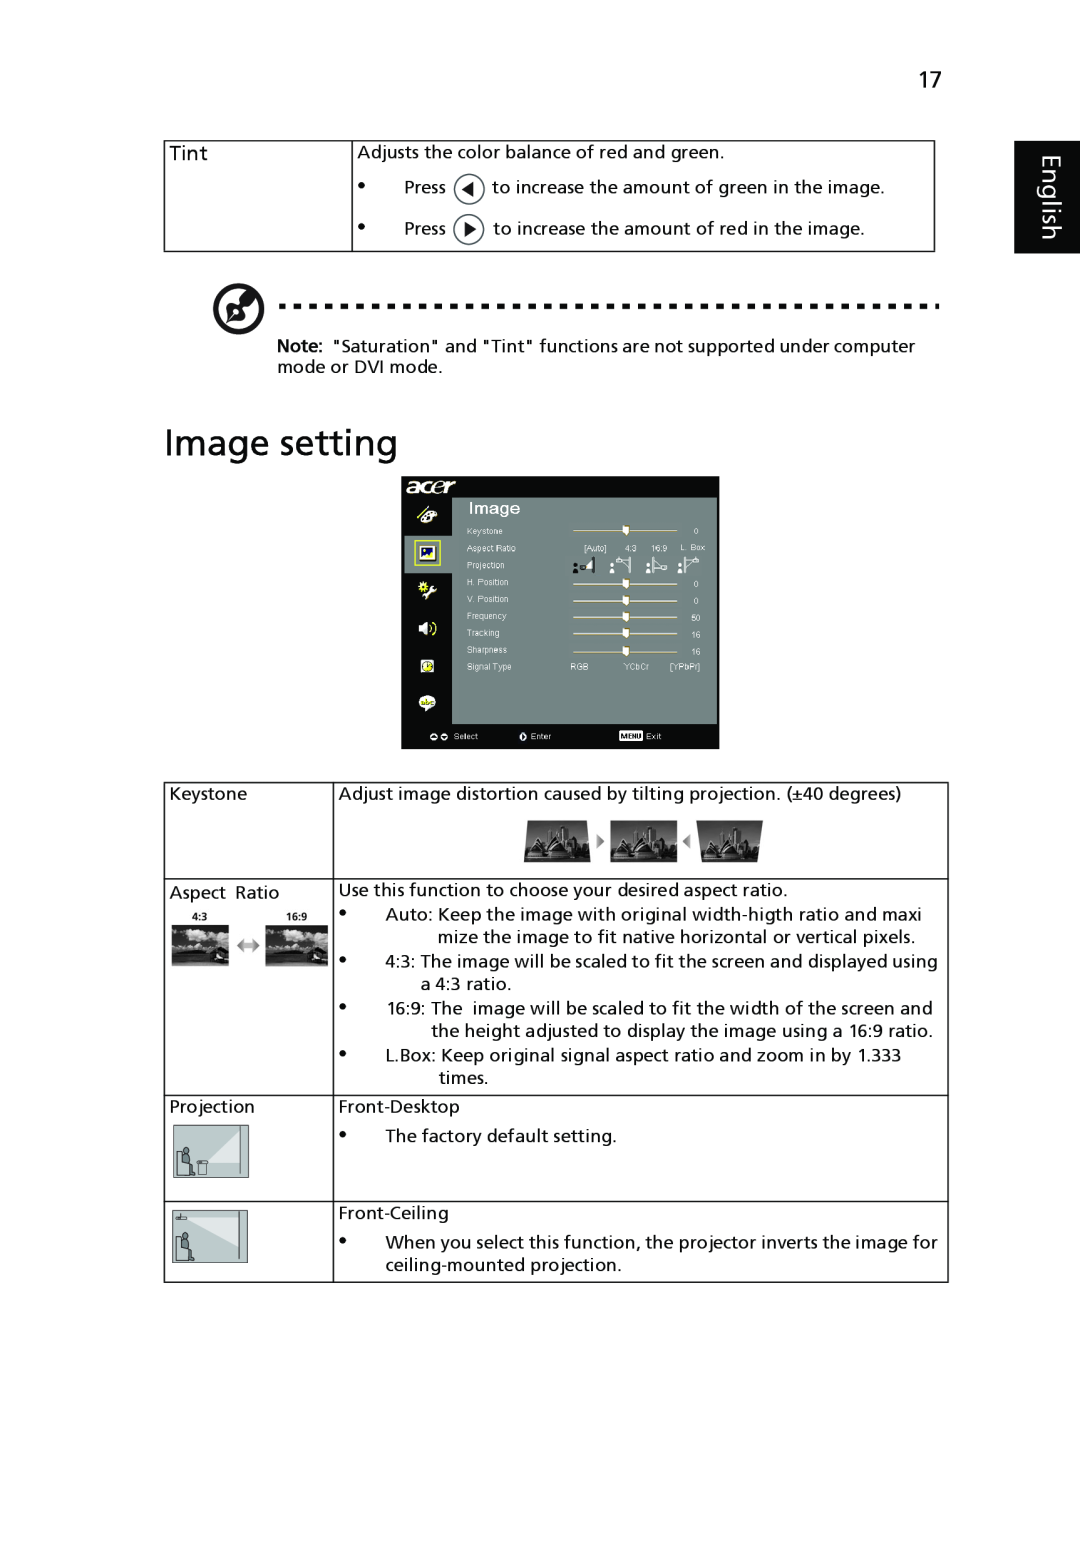 Acer H5350 manual Image setting, English, Tint 